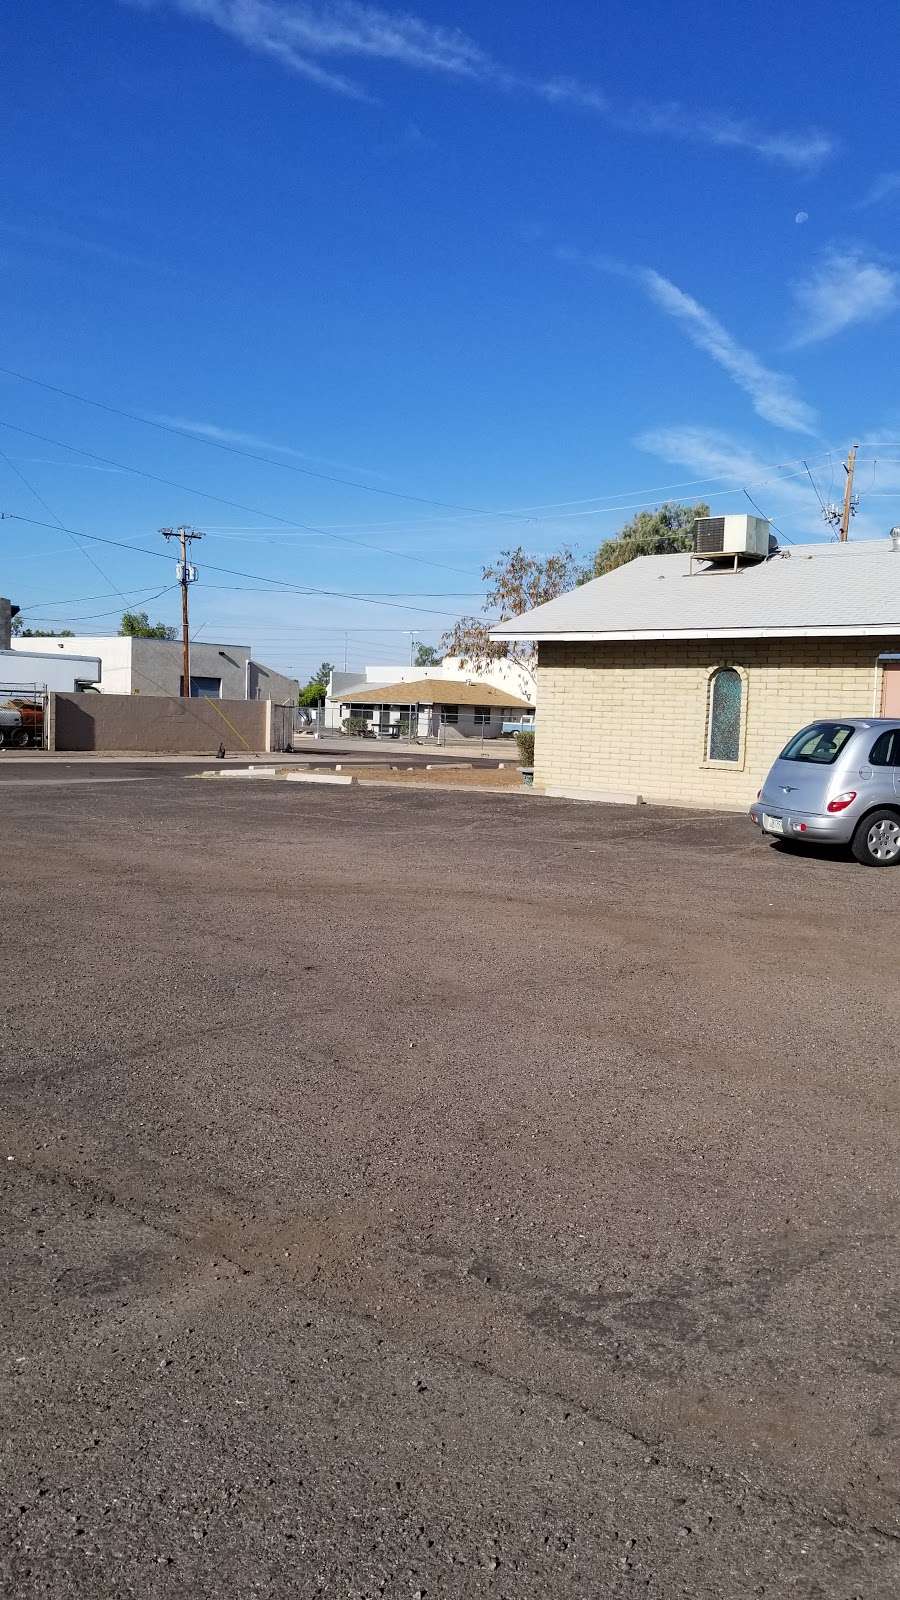 New Hope Family Church | 9511 N 16th Ave, Phoenix, AZ 85021, USA | Phone: (602) 944-8489